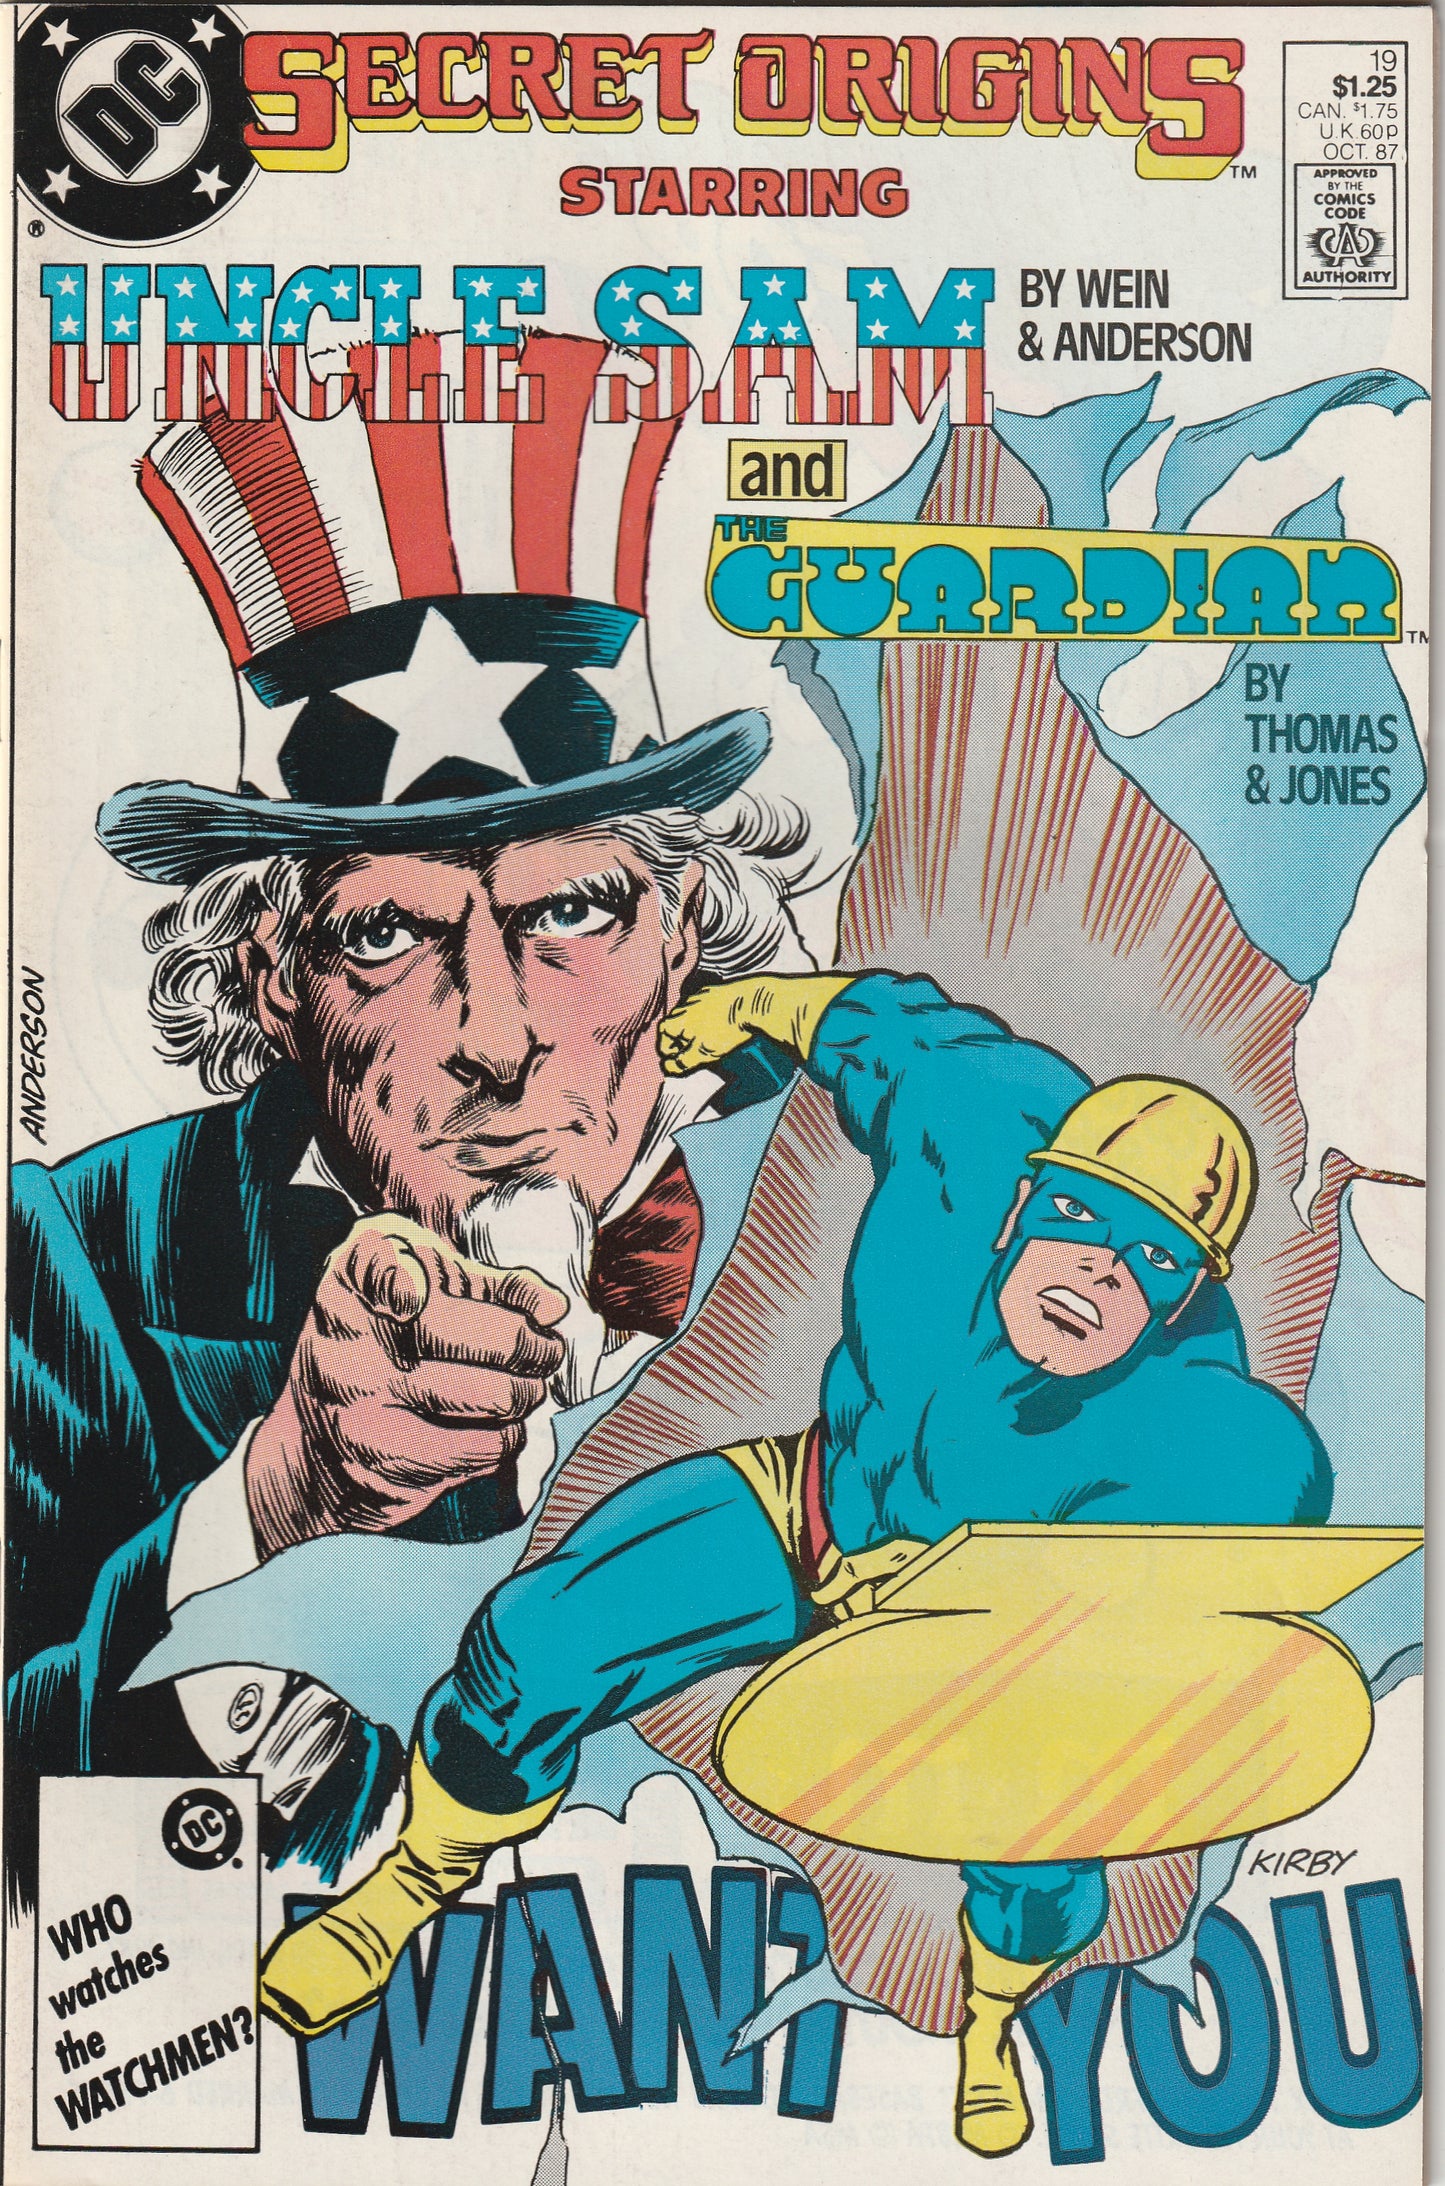 Secret Origins #19 (1987) - Uncle Sam and The Guardian